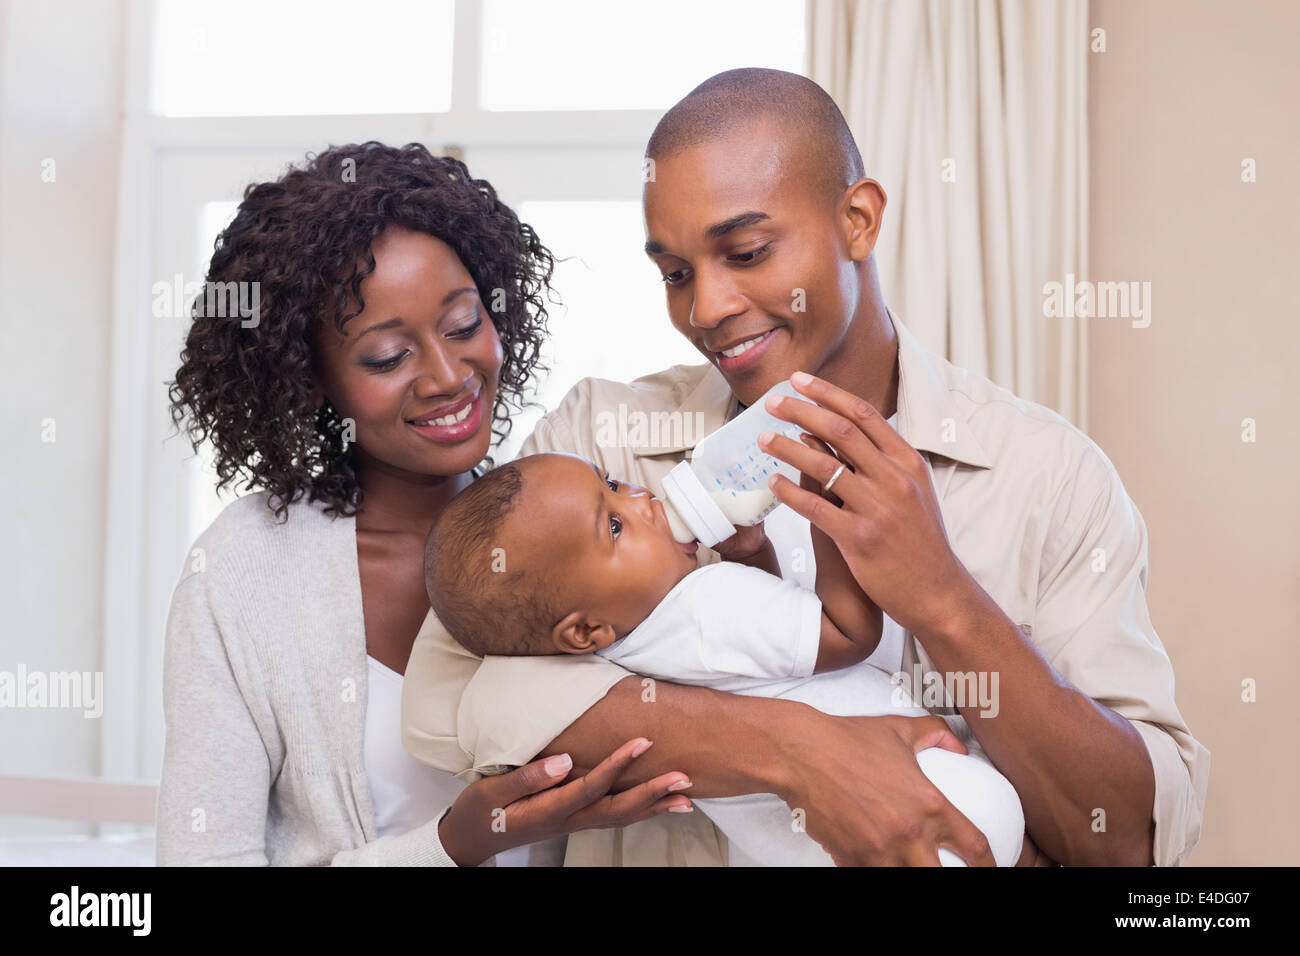 Happy parents feeding their baby boy a bottle Stock Photo